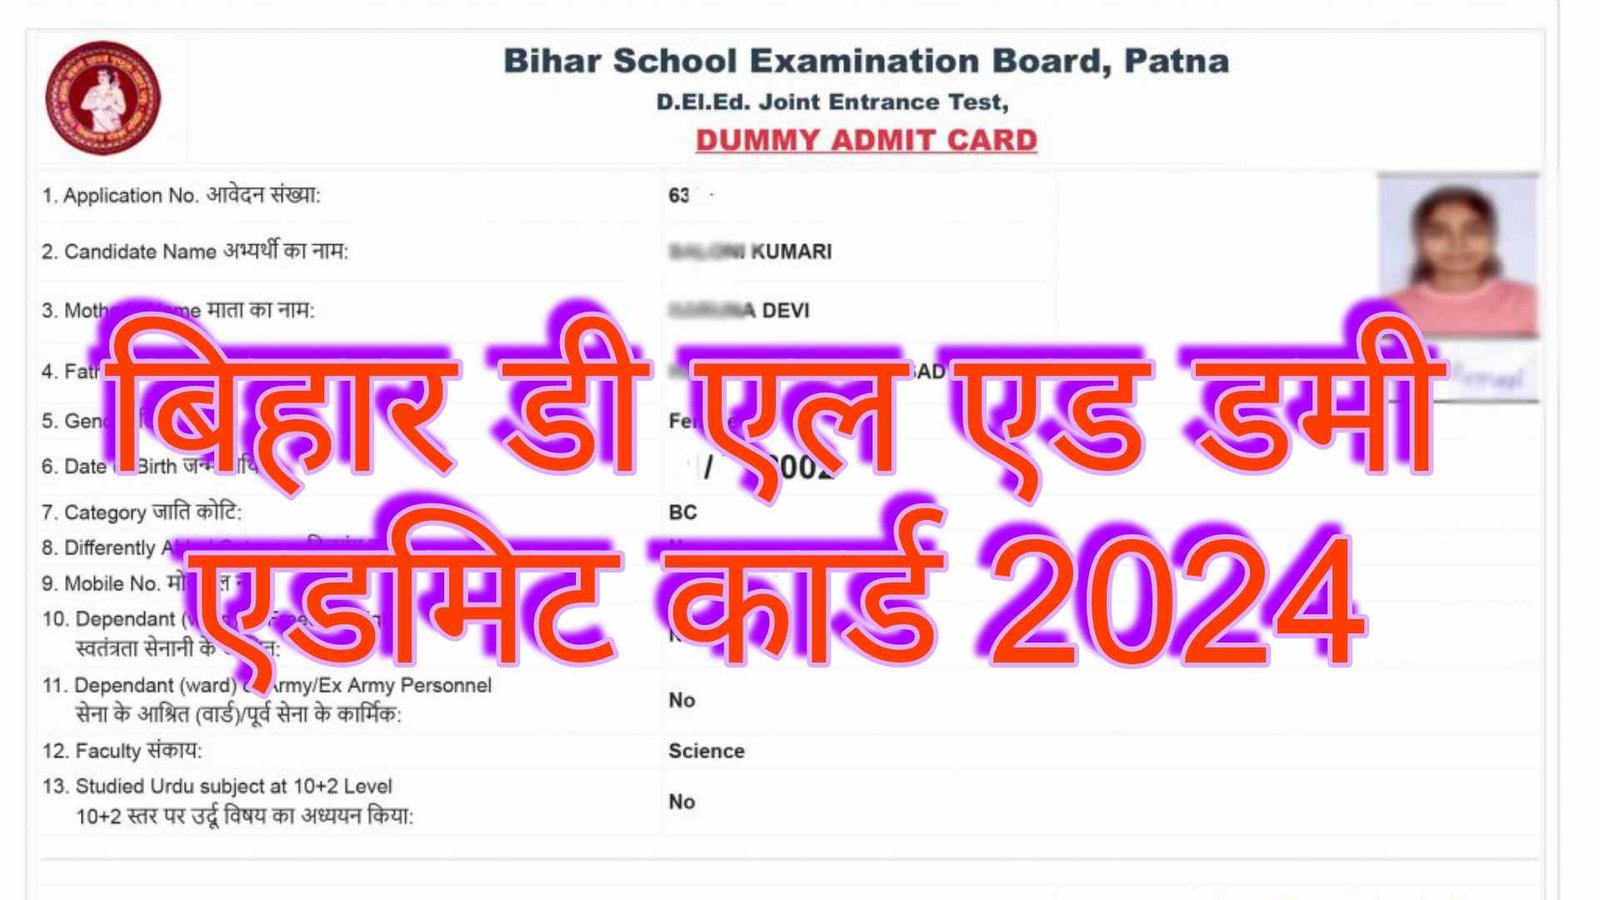 Bihar Deled Dummy Admit Card 2024